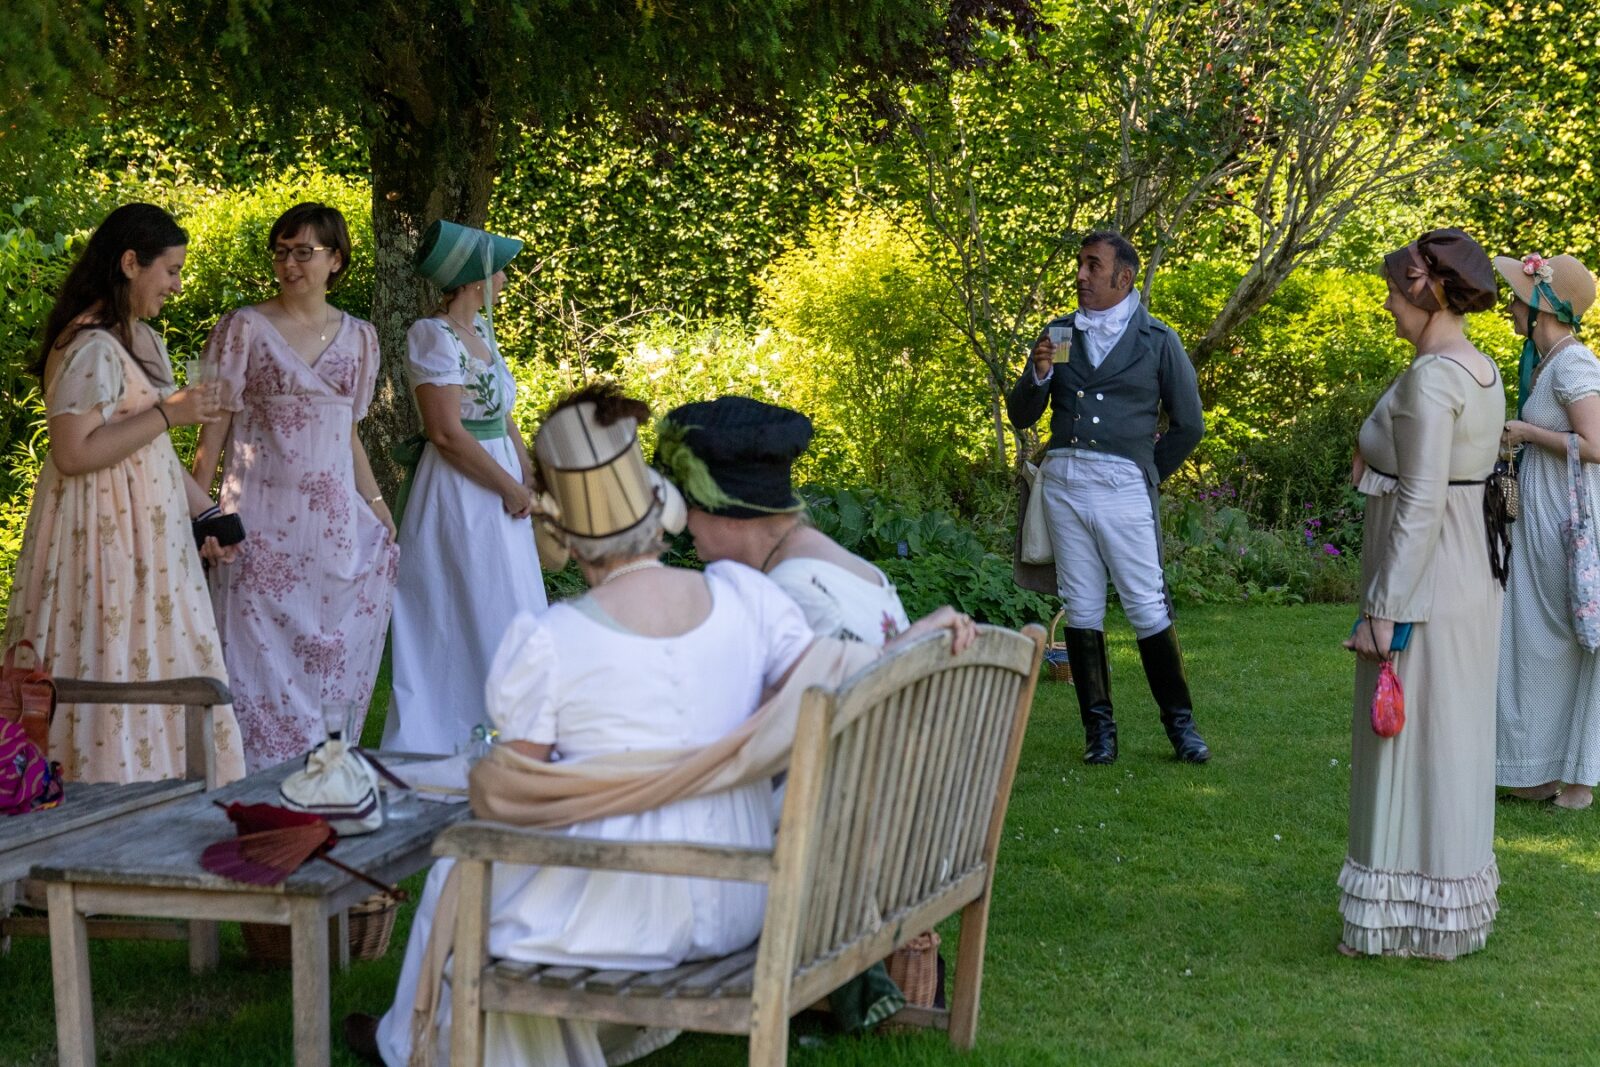 A group of people in Regency dress in the garden at Jane Austen's House